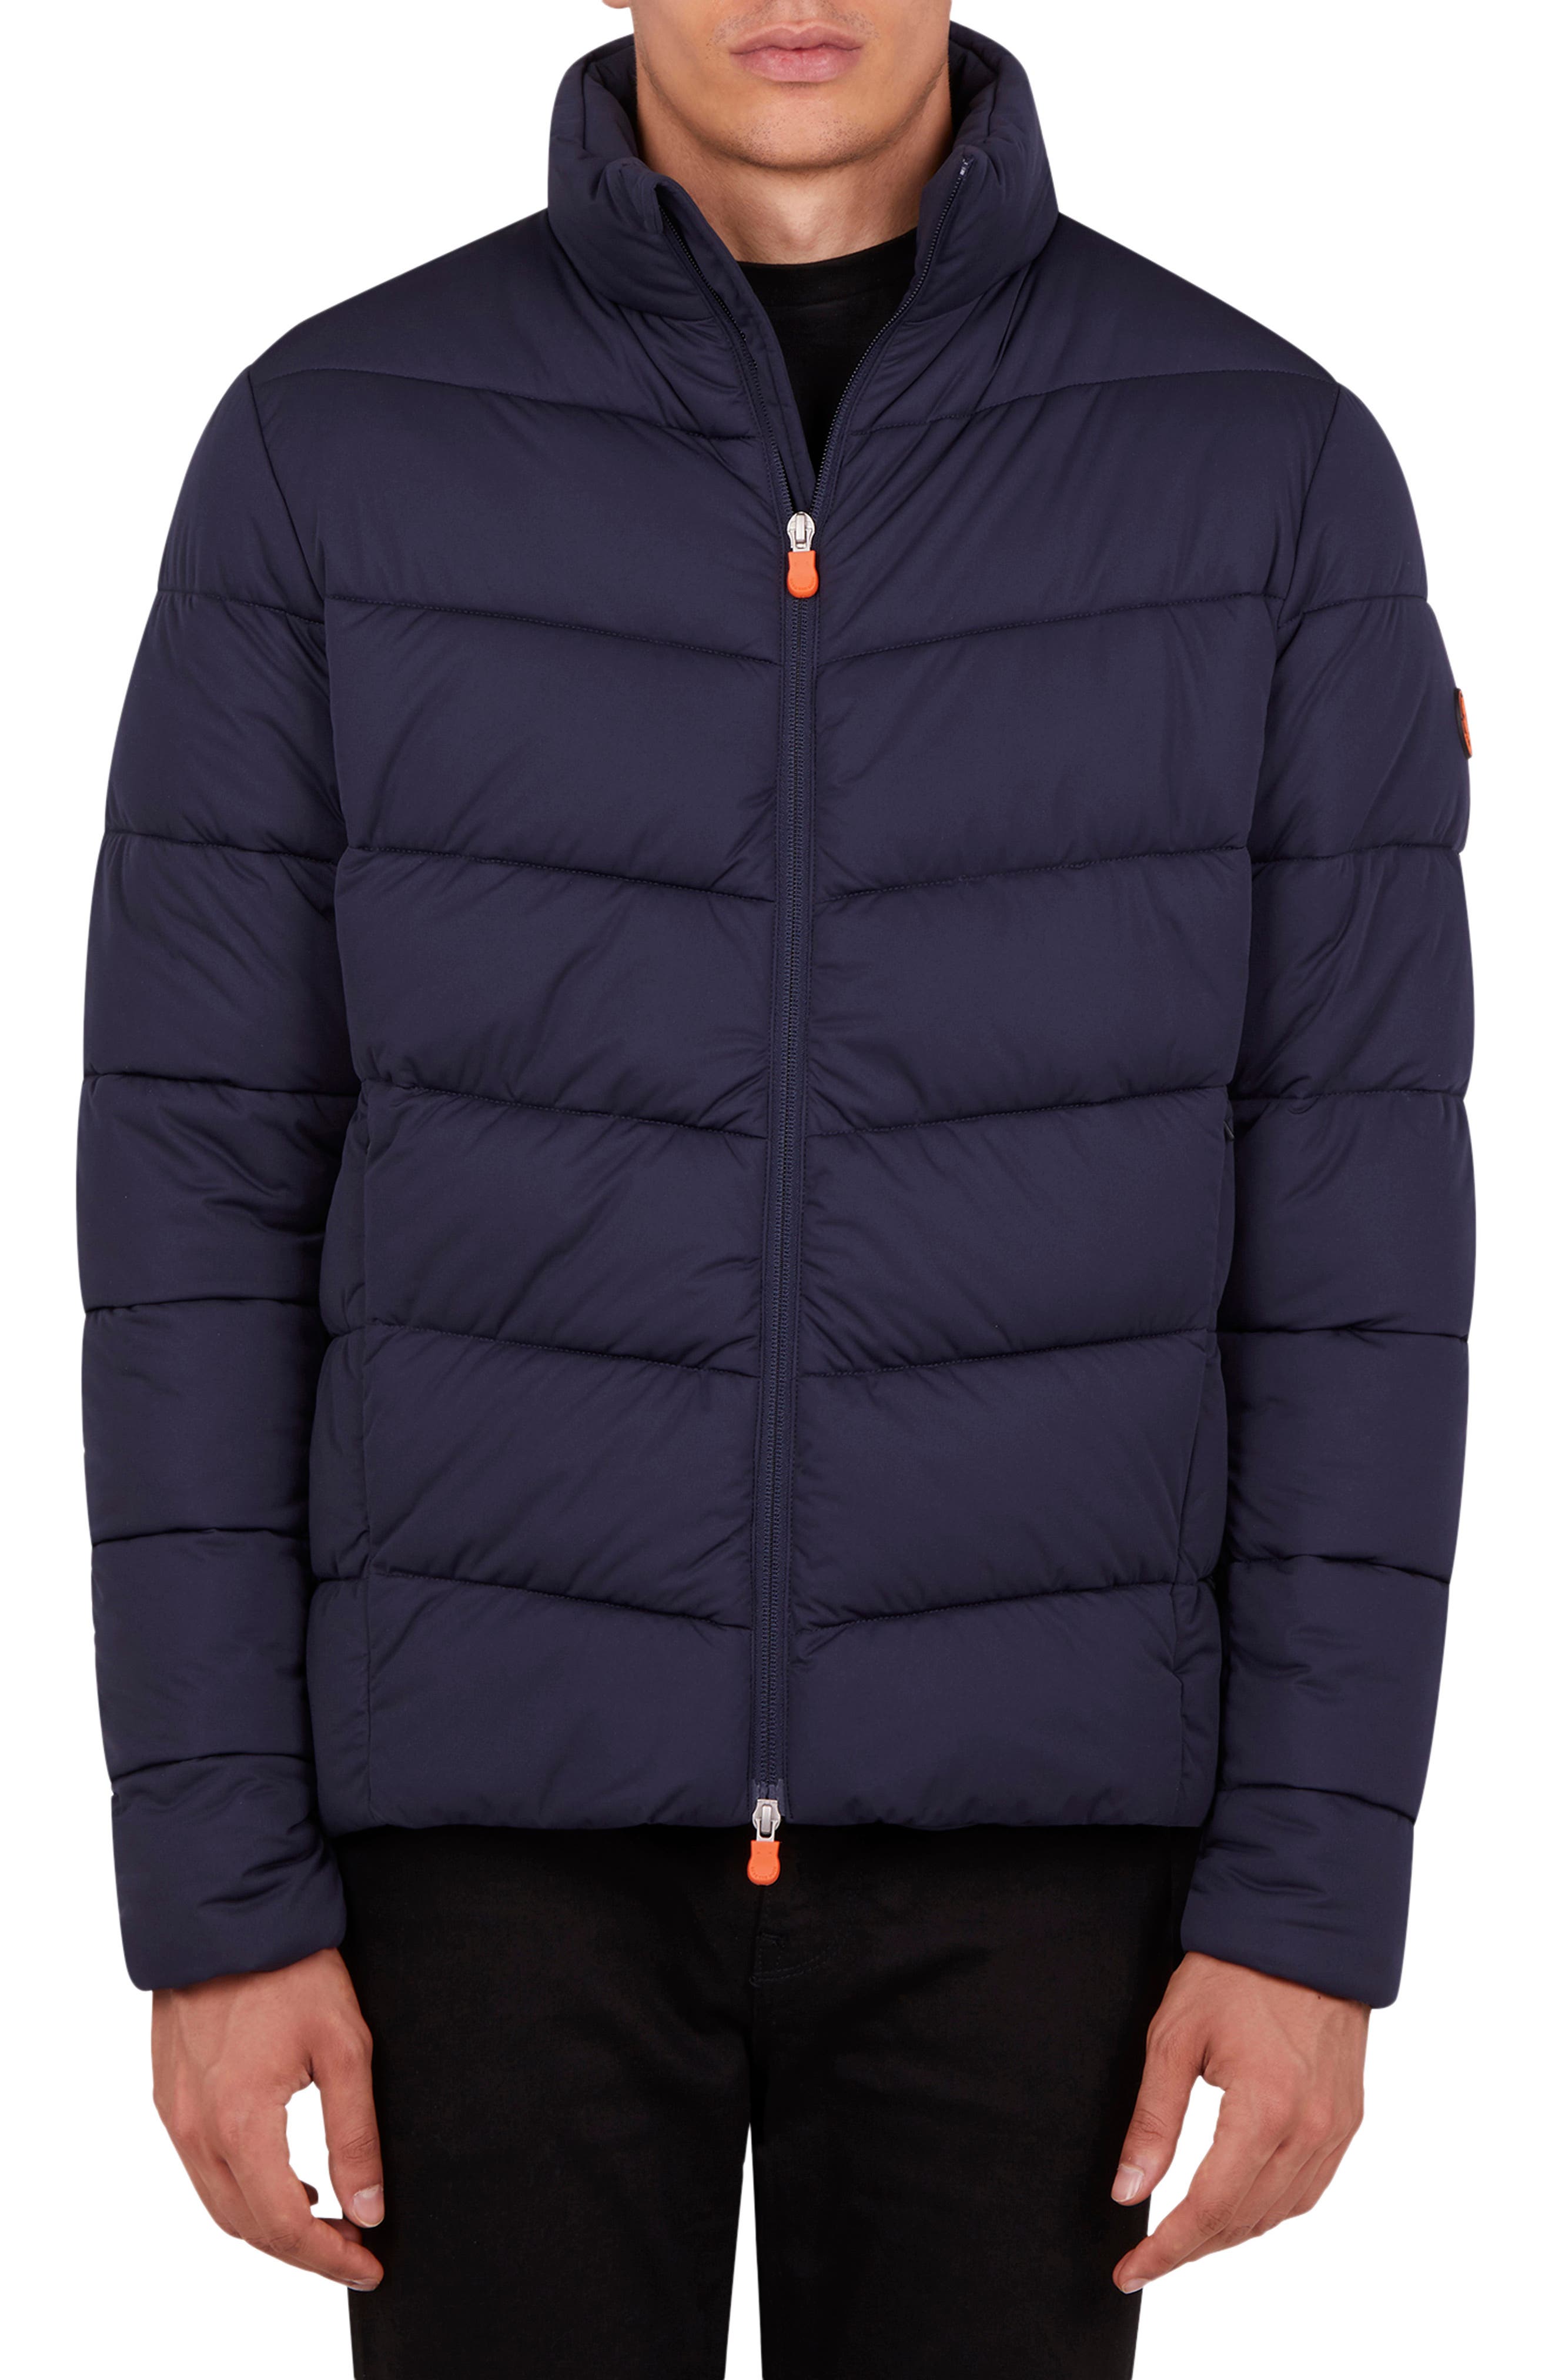 Mens dStruct Padded Puffer Style Jacket Spring Coat Sizes NEW Sizes S-XL AW1718 